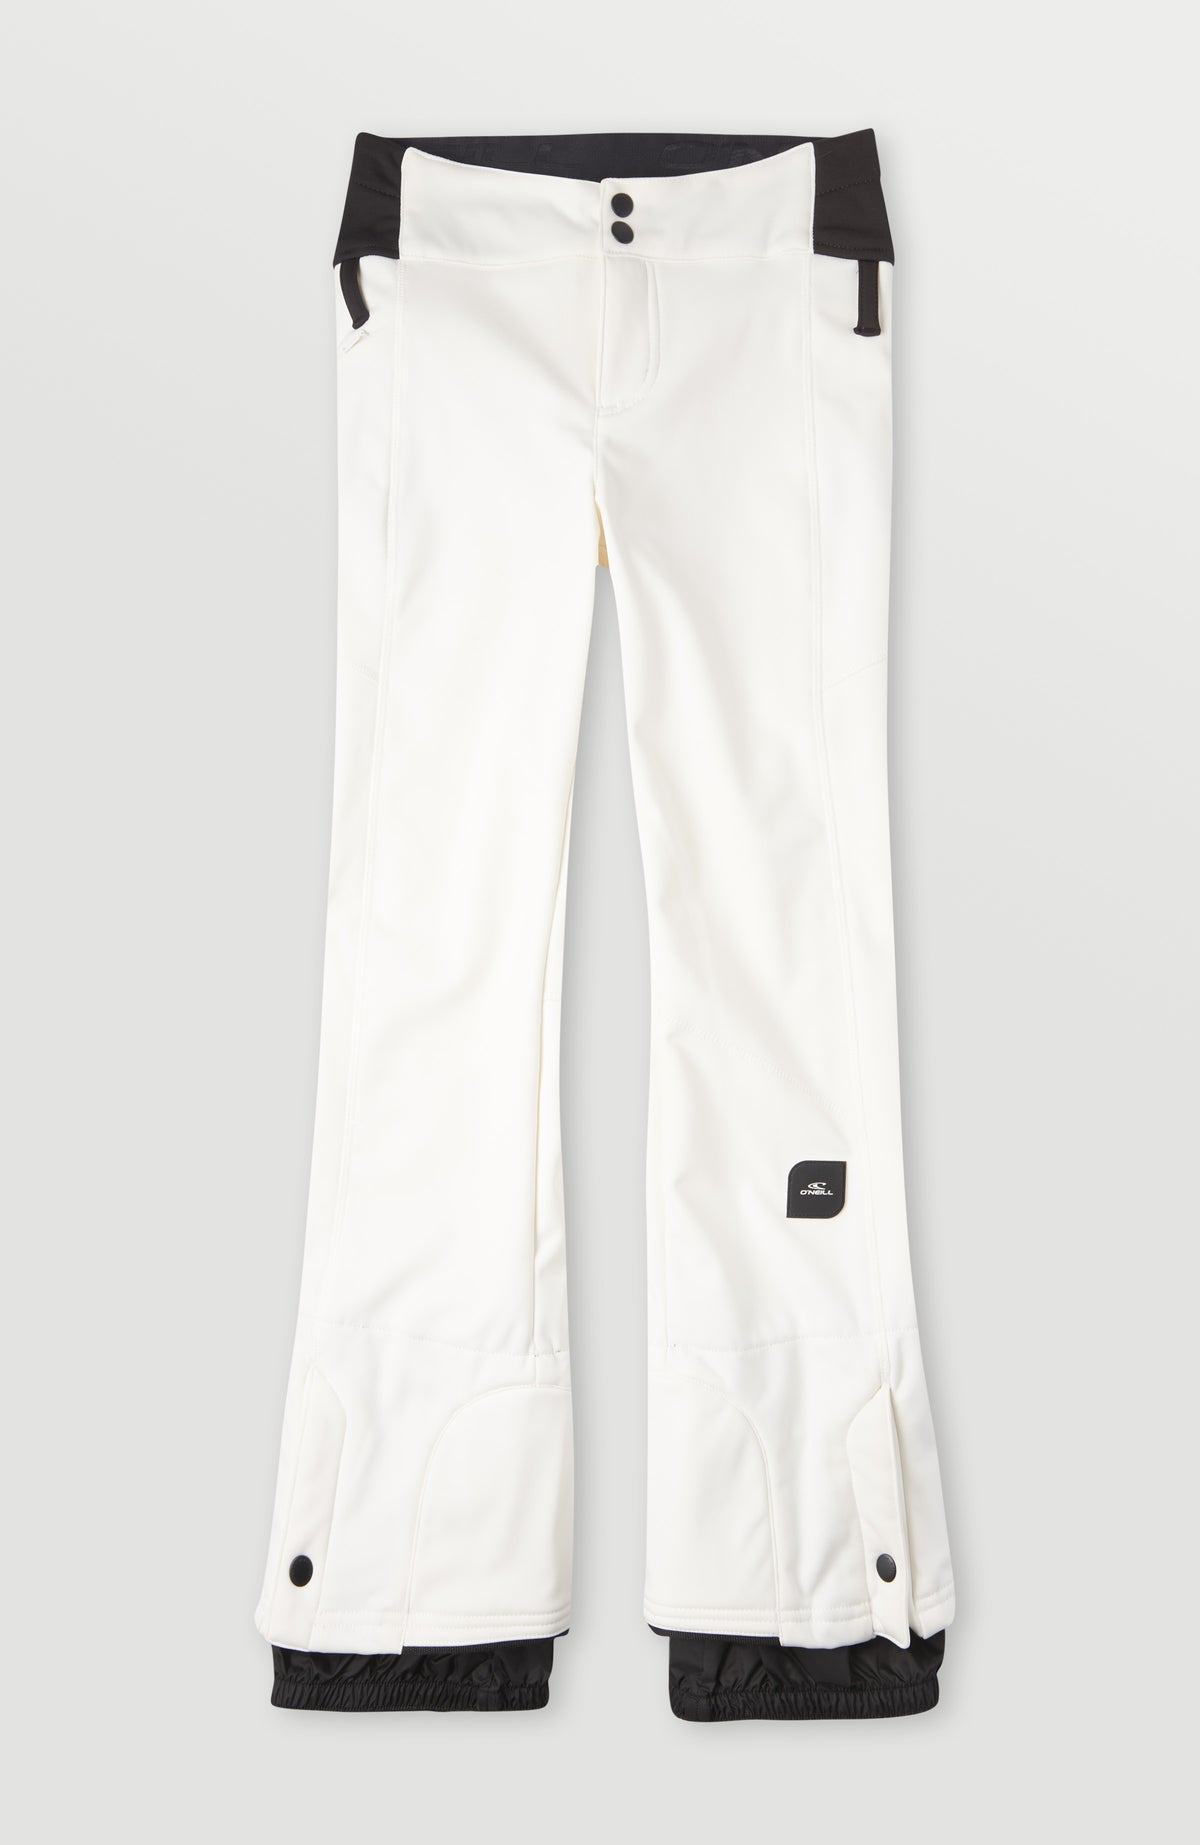 Softshell Ski Pants - Women's Stretch Ski Pants - White